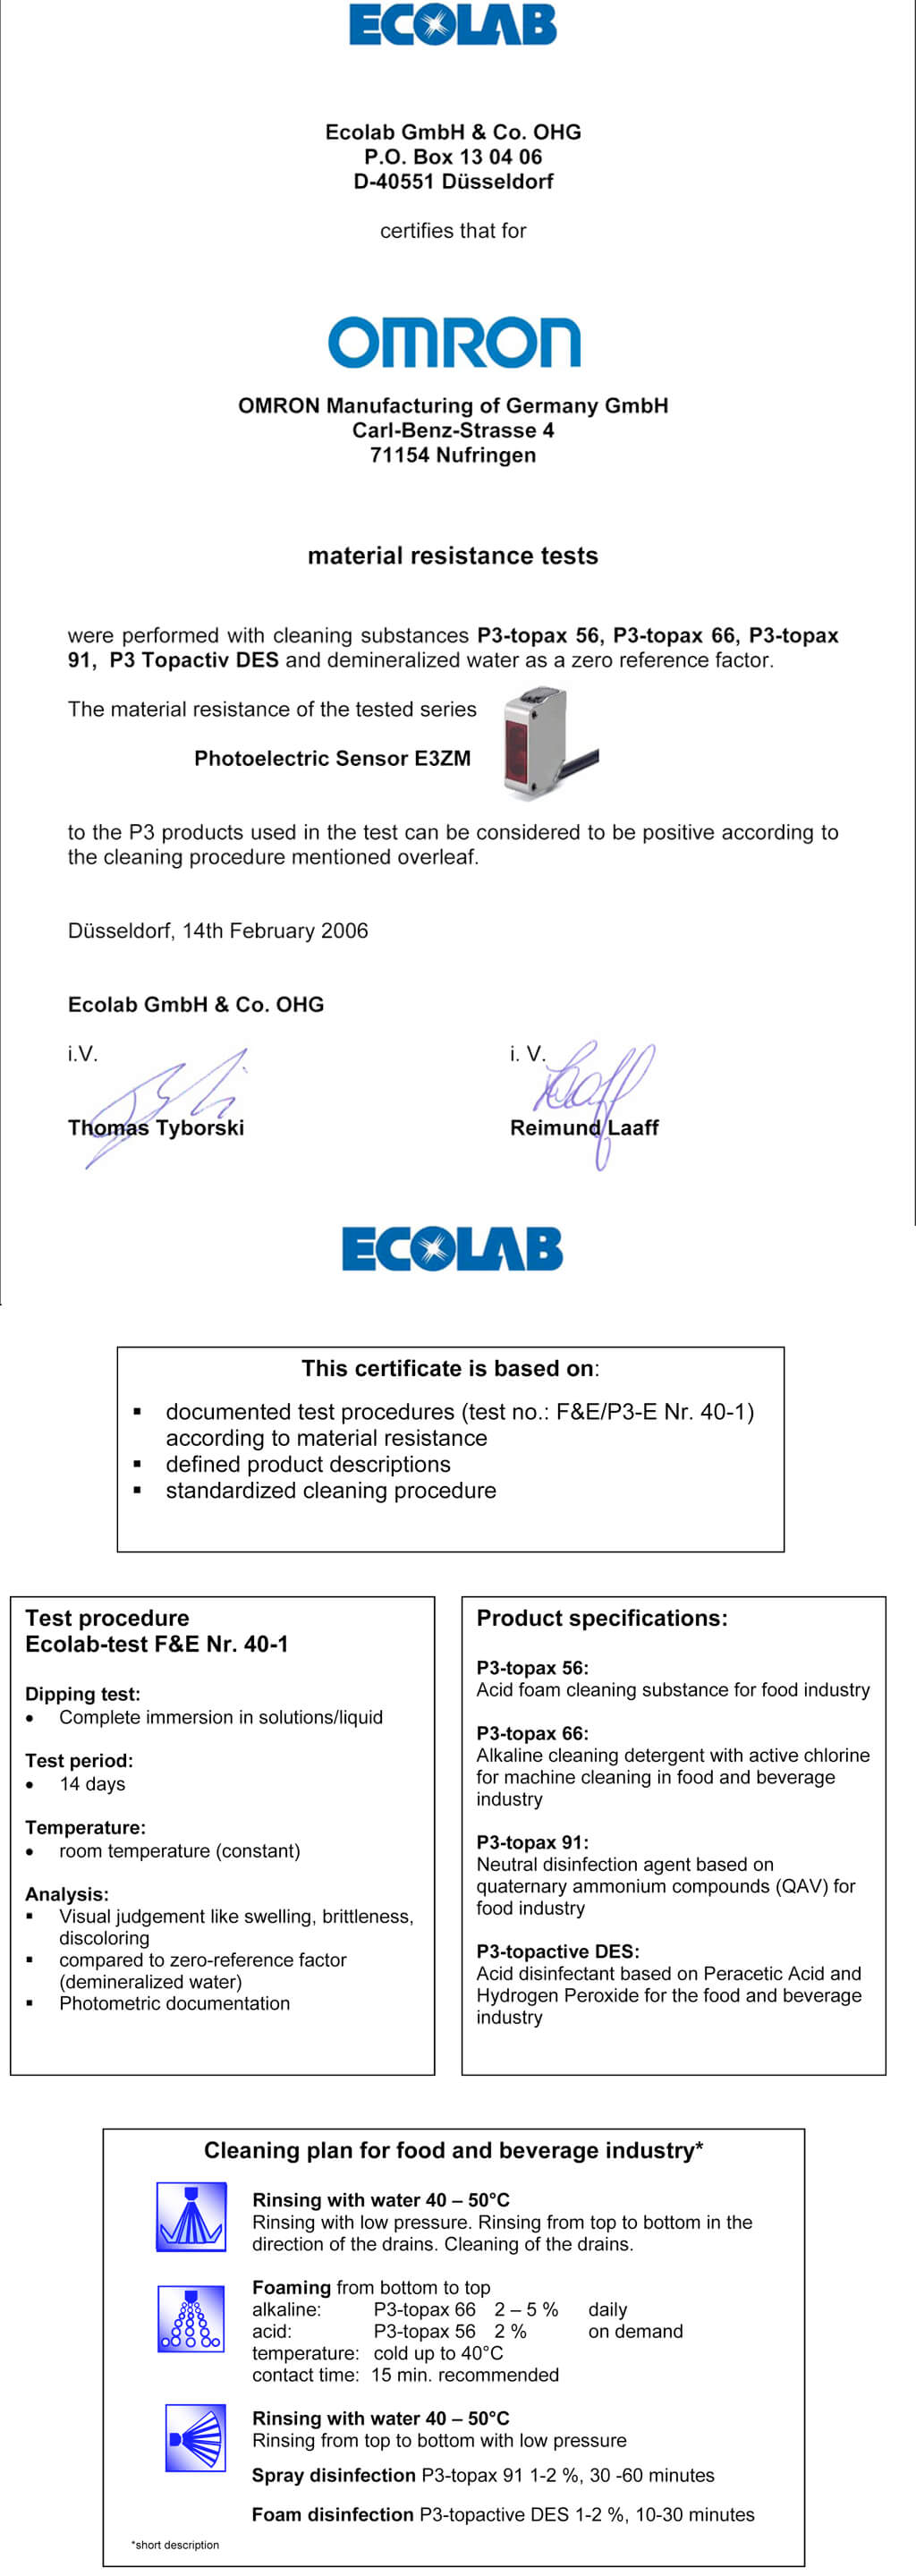 e3zm ecolab-2 prod